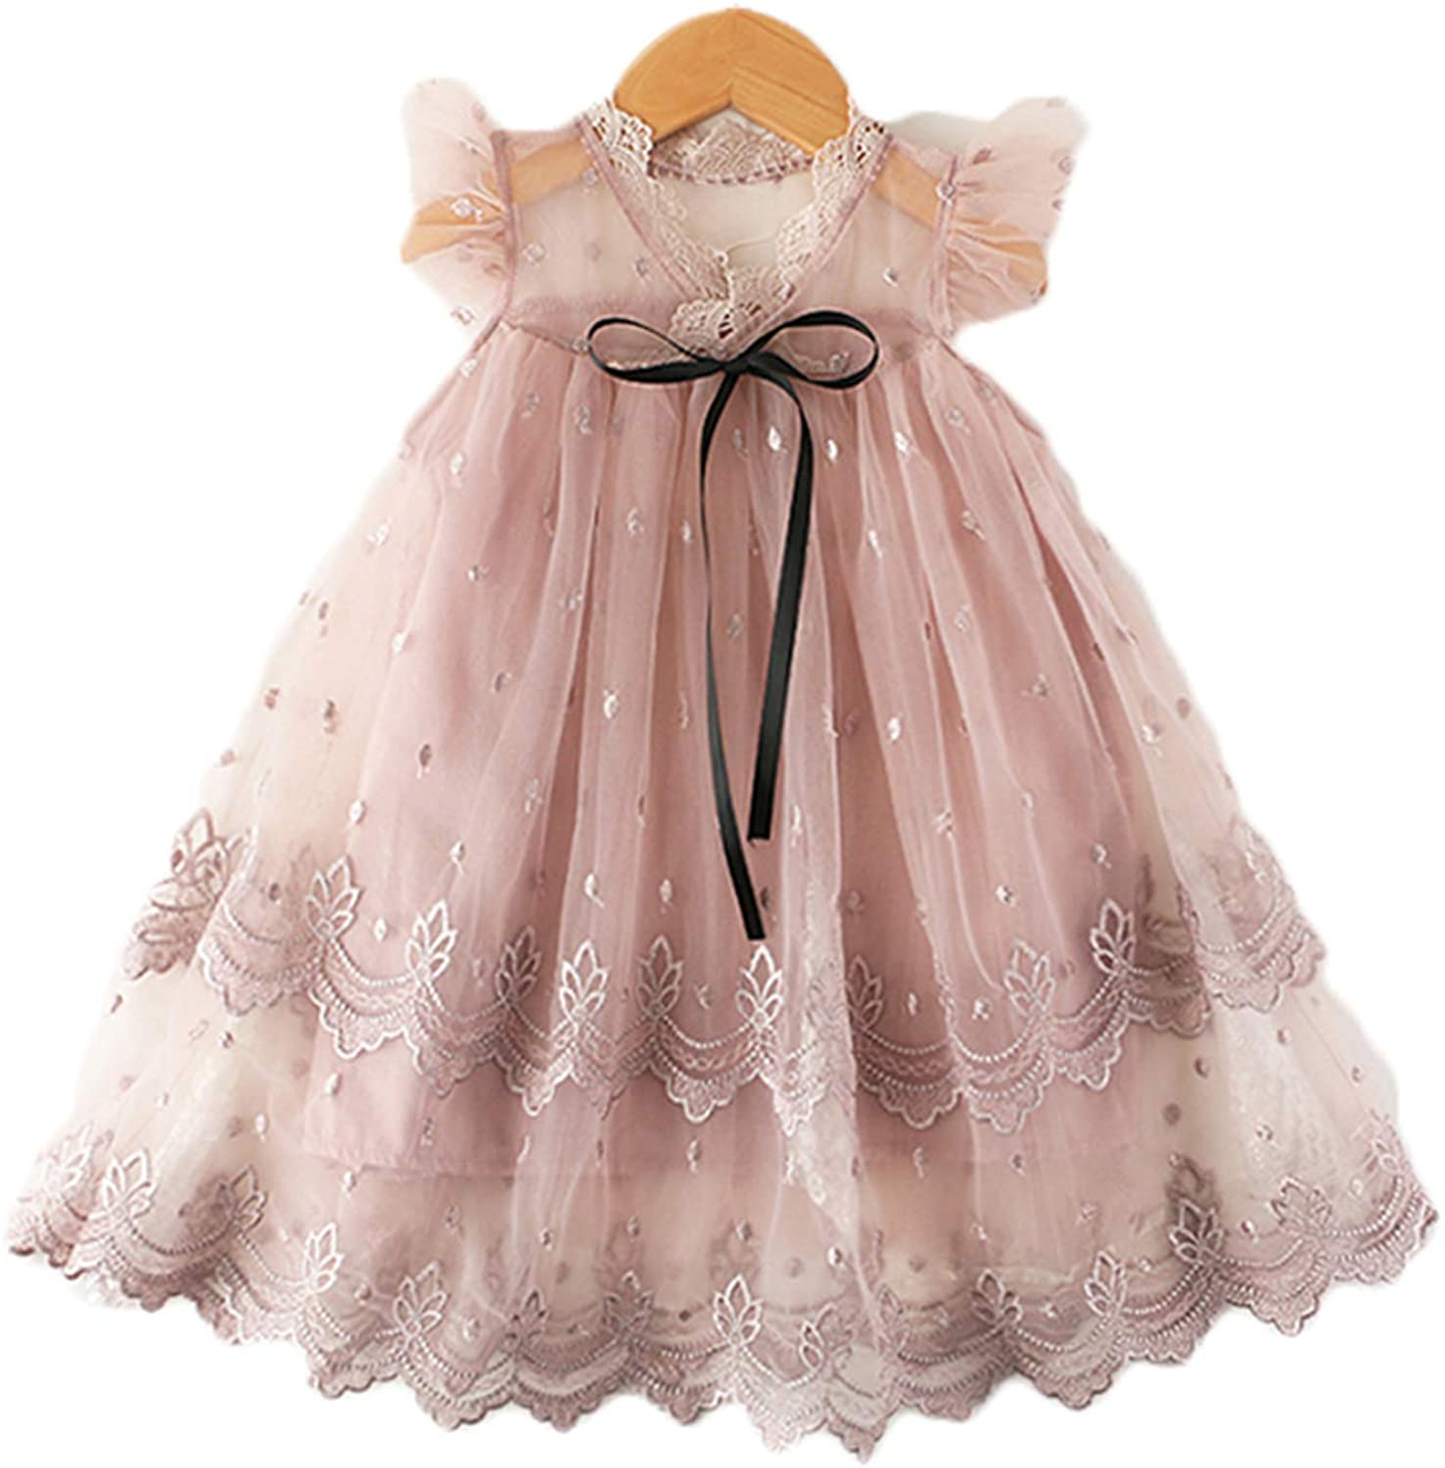 "Lace Tulle Sleeveless Flower Girl Dress for Summer Weddings - Vintage Style"